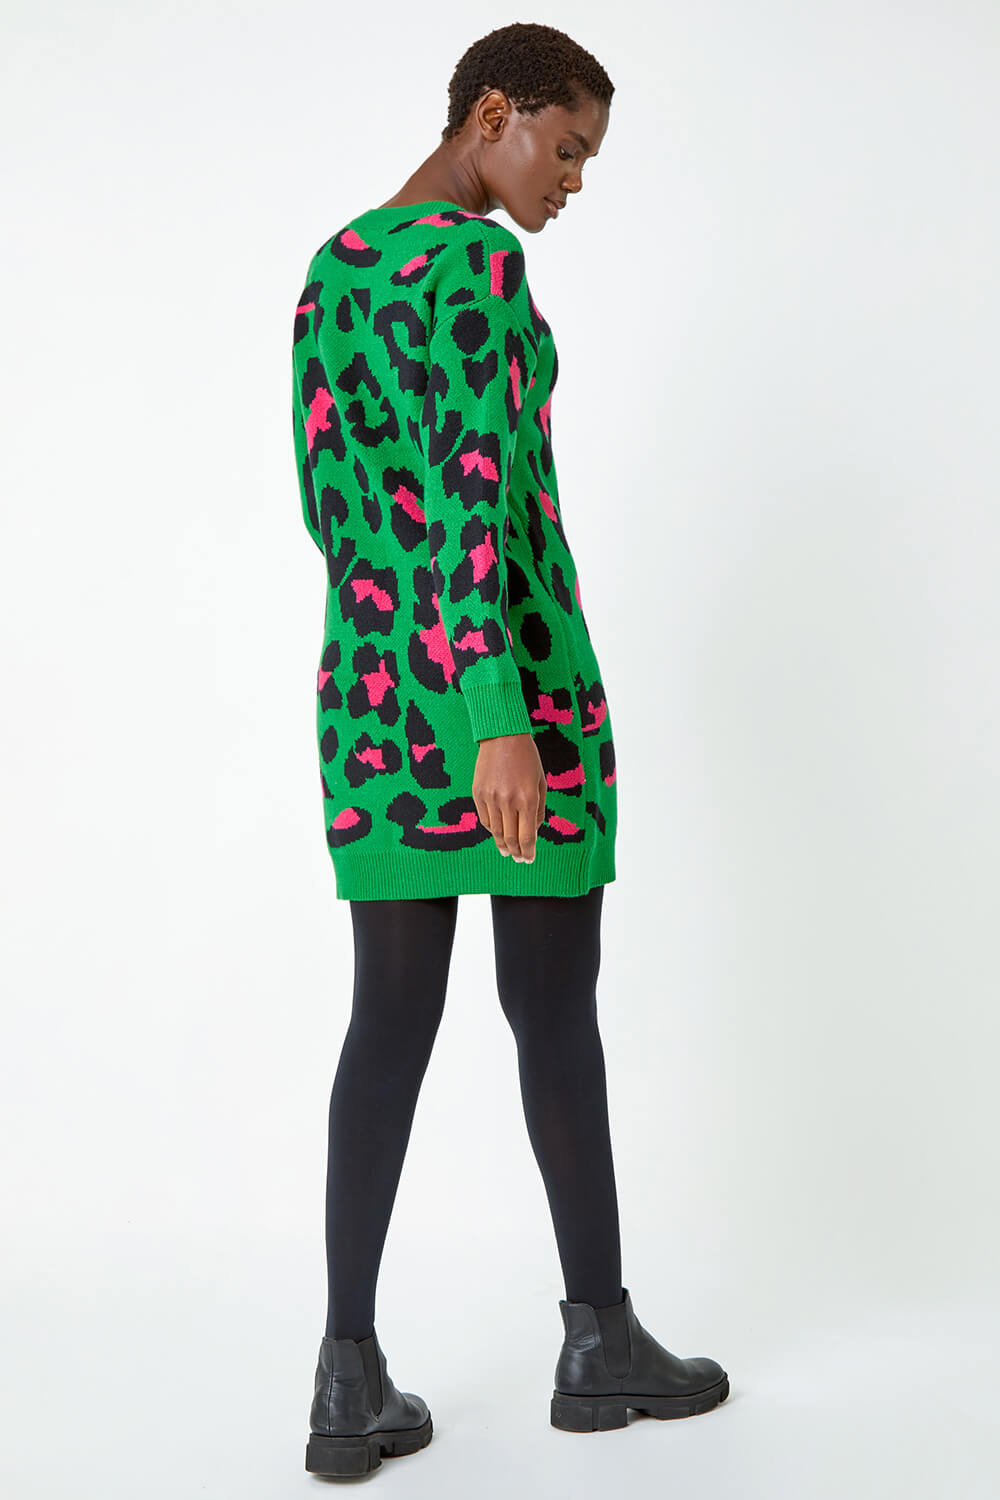 Green Animal Print Knitted Jumper Dress | Roman UK